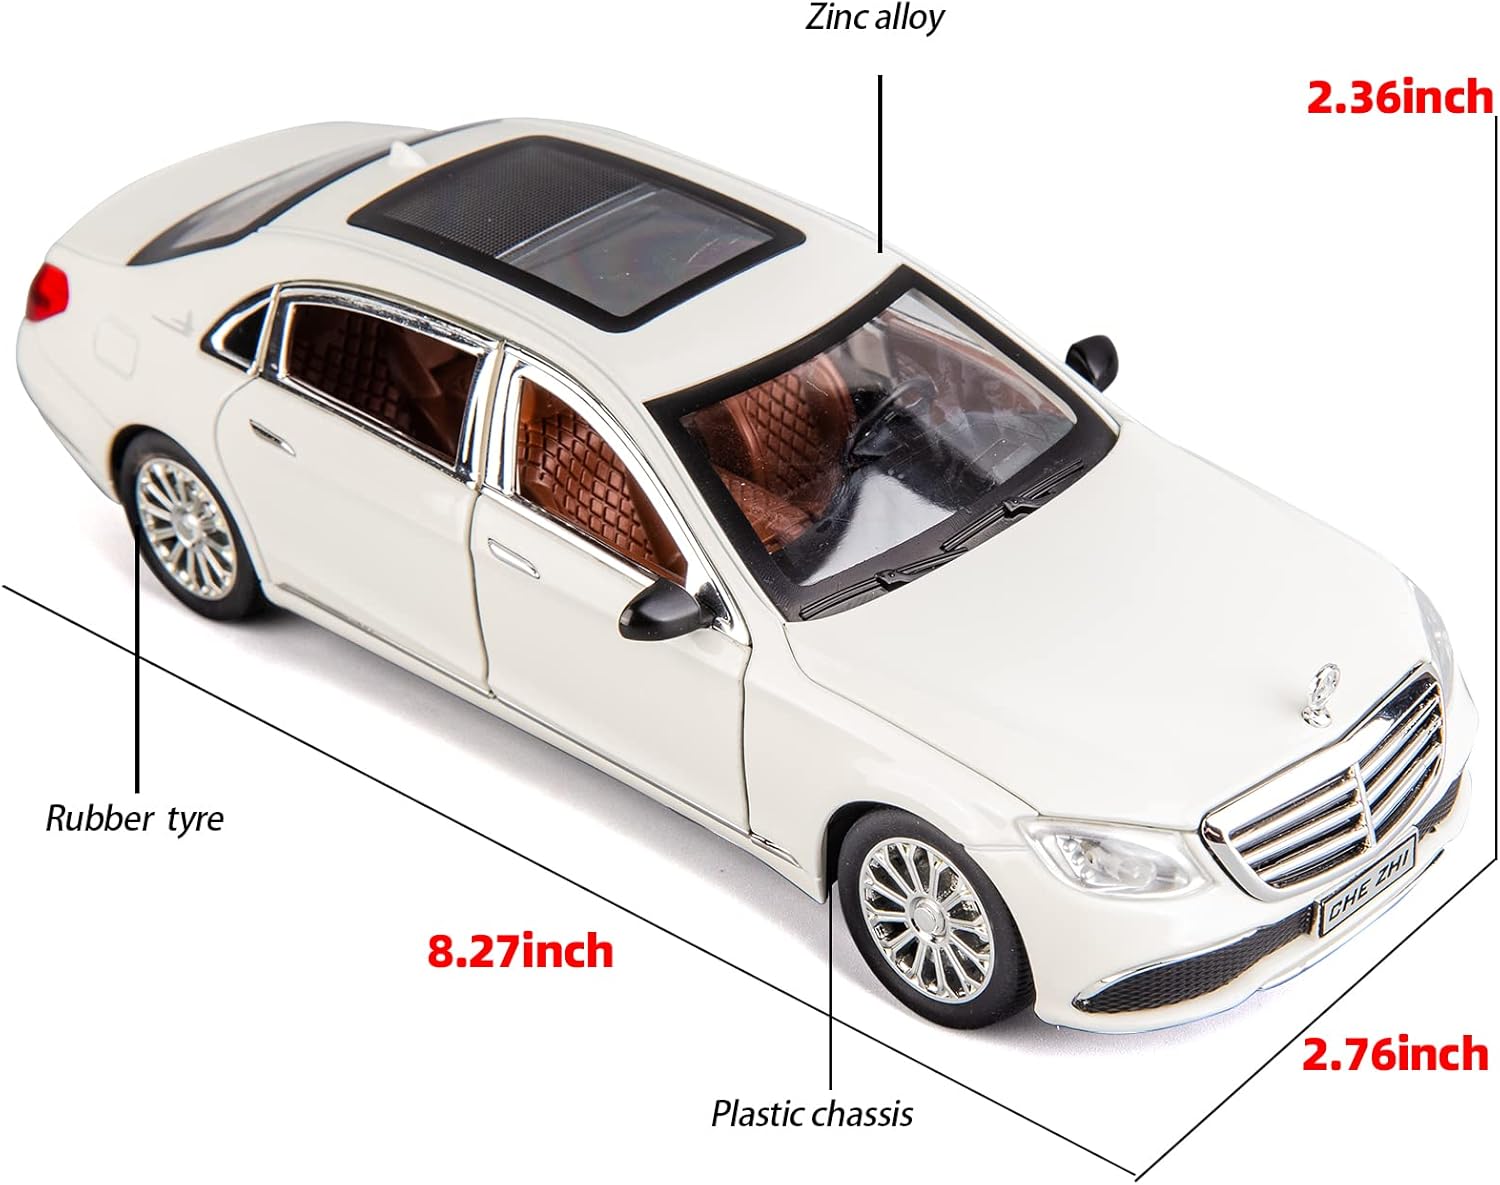 CHE ZHI Toy Car Diecast 1:24 Scale Mercedes Benz Toy Car Alloy - White